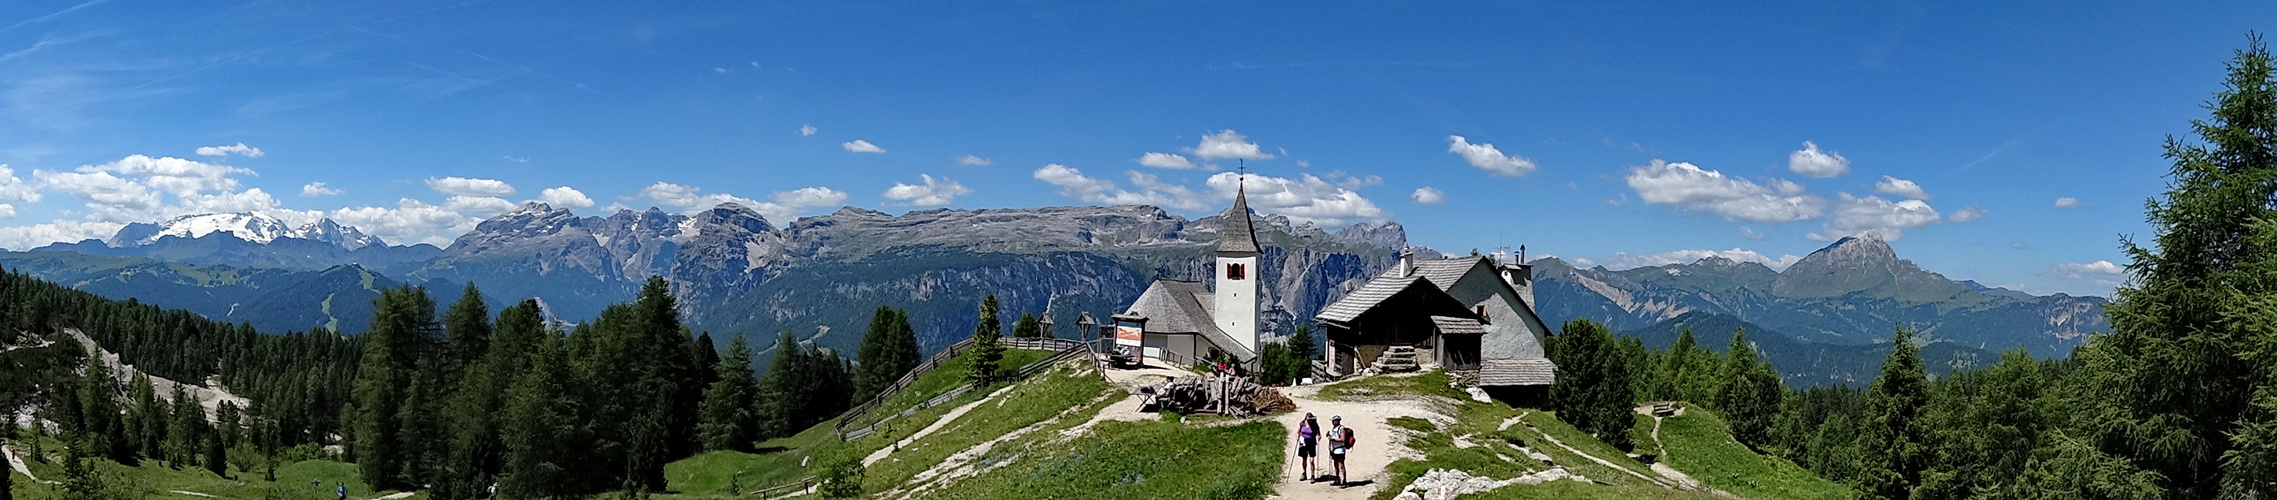 St. Croce /Südtirol